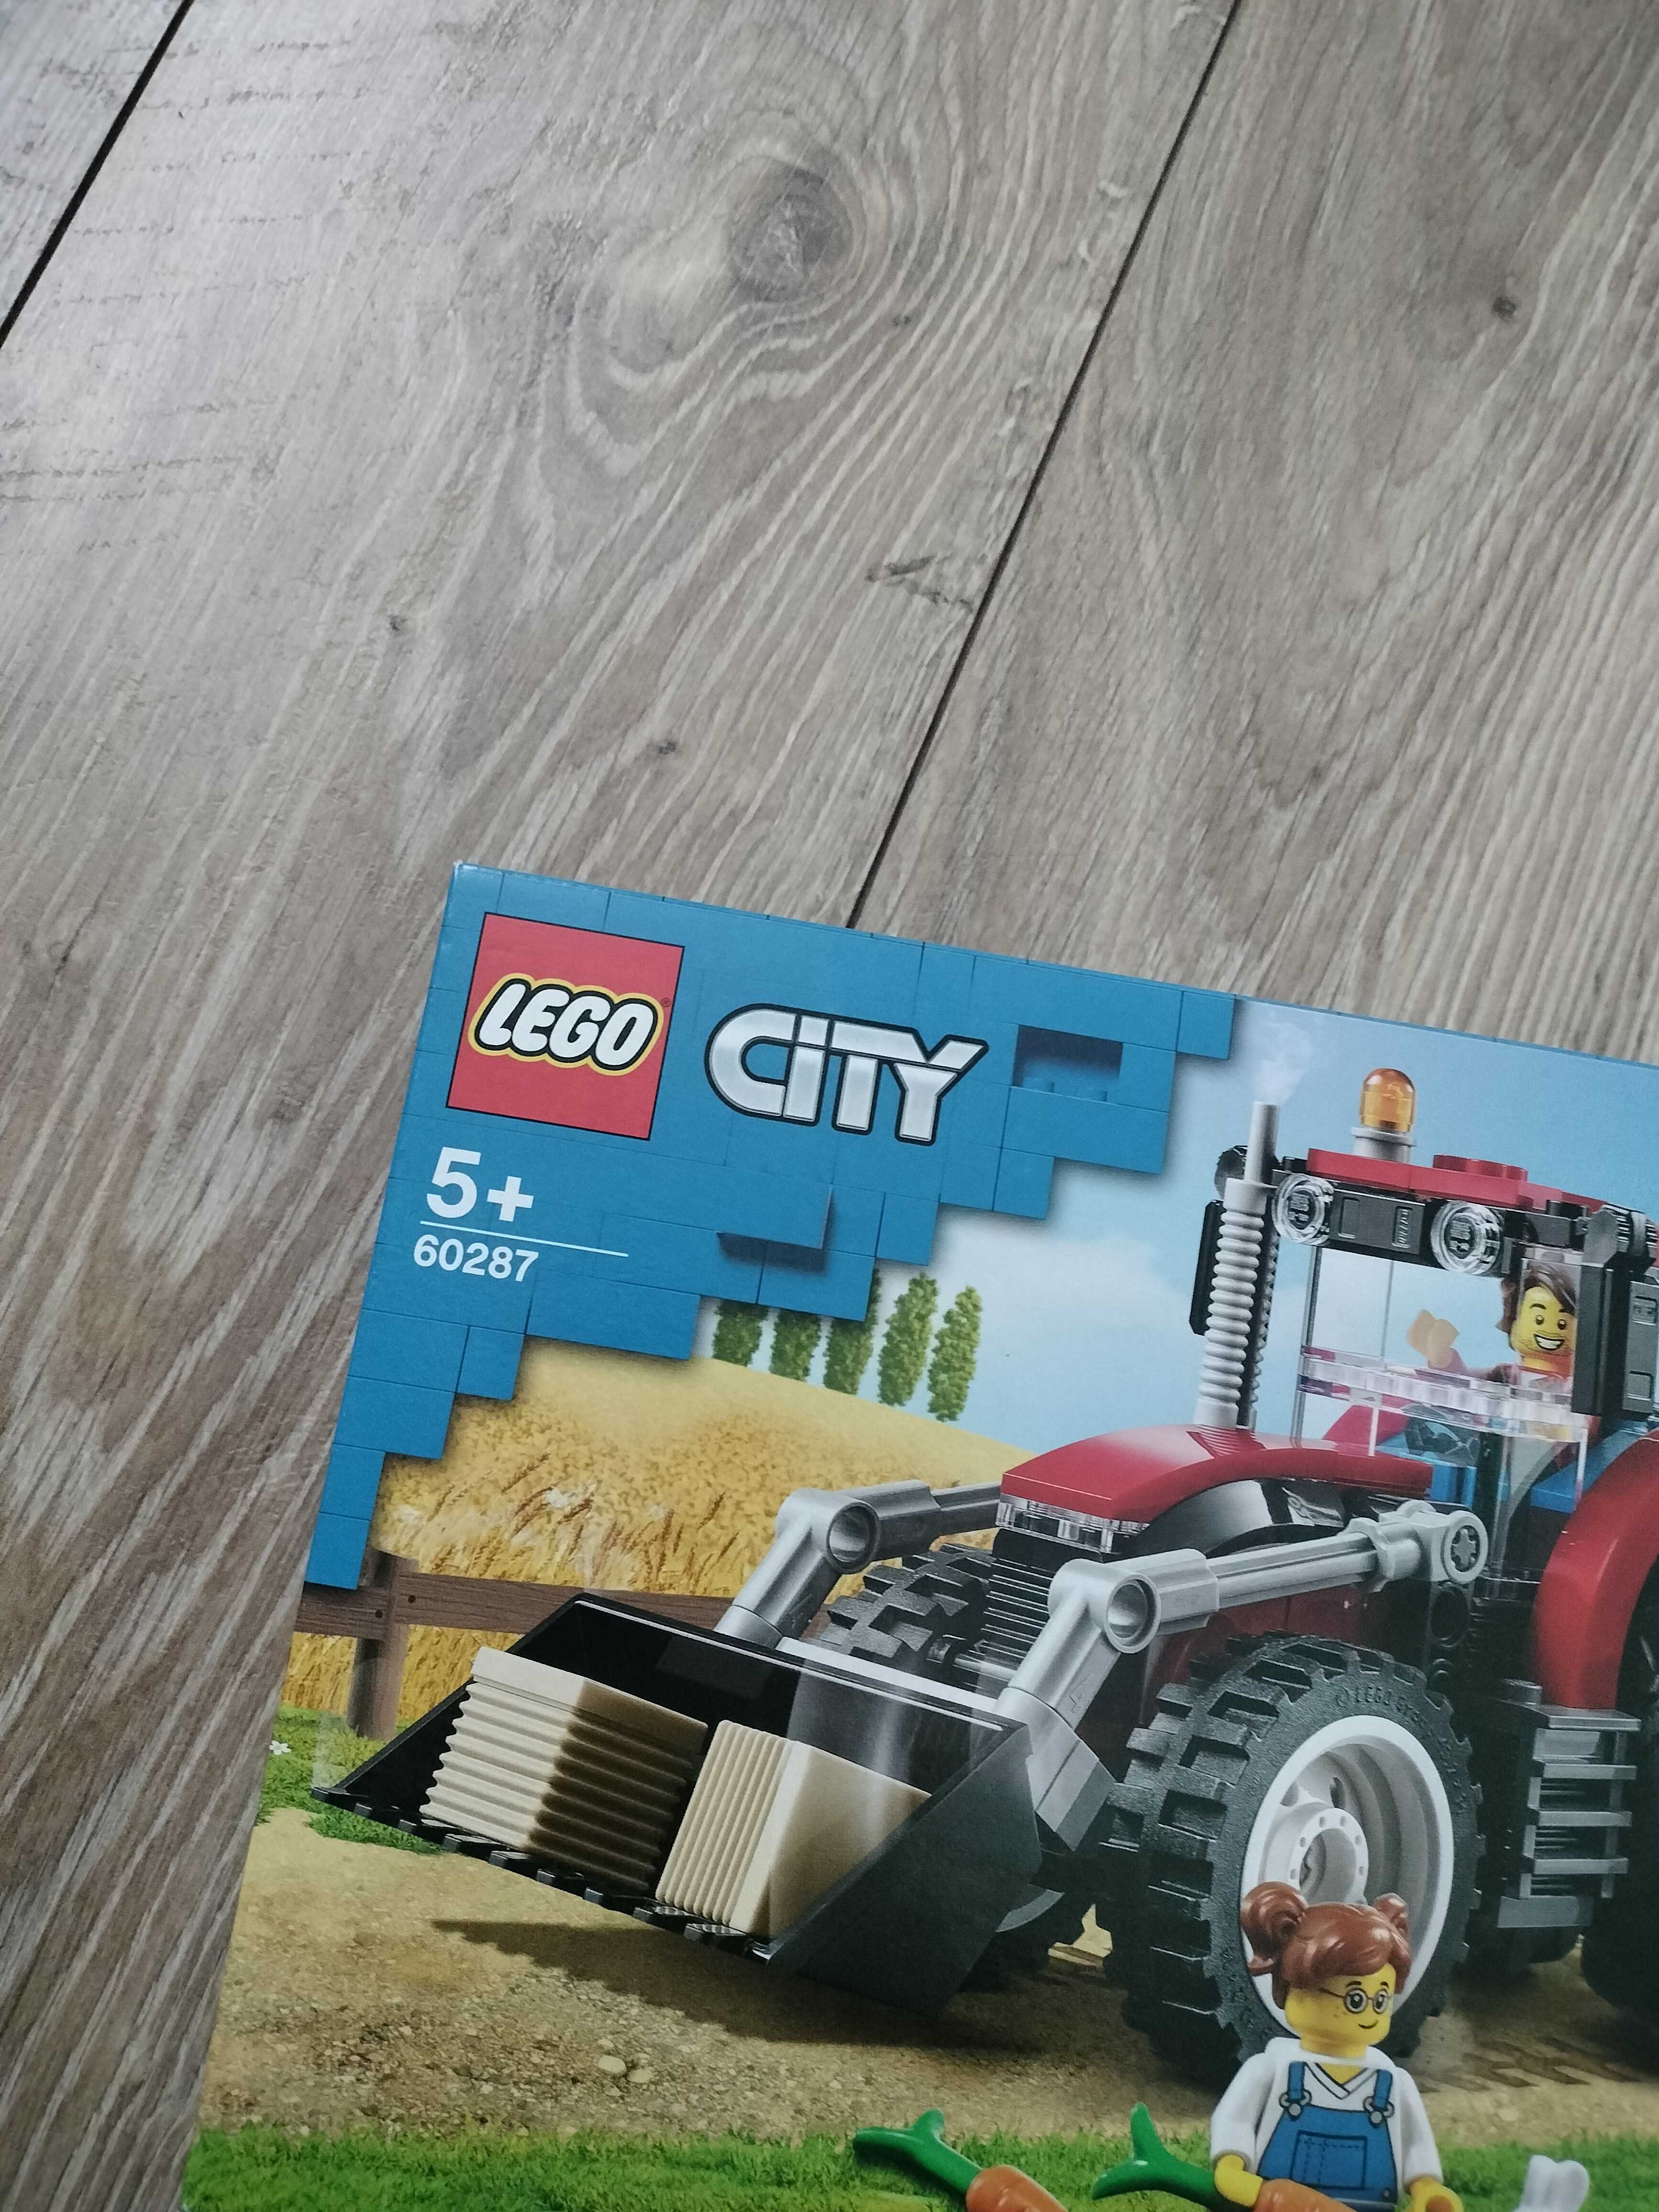 Nowe klocki LEGO traktor farma